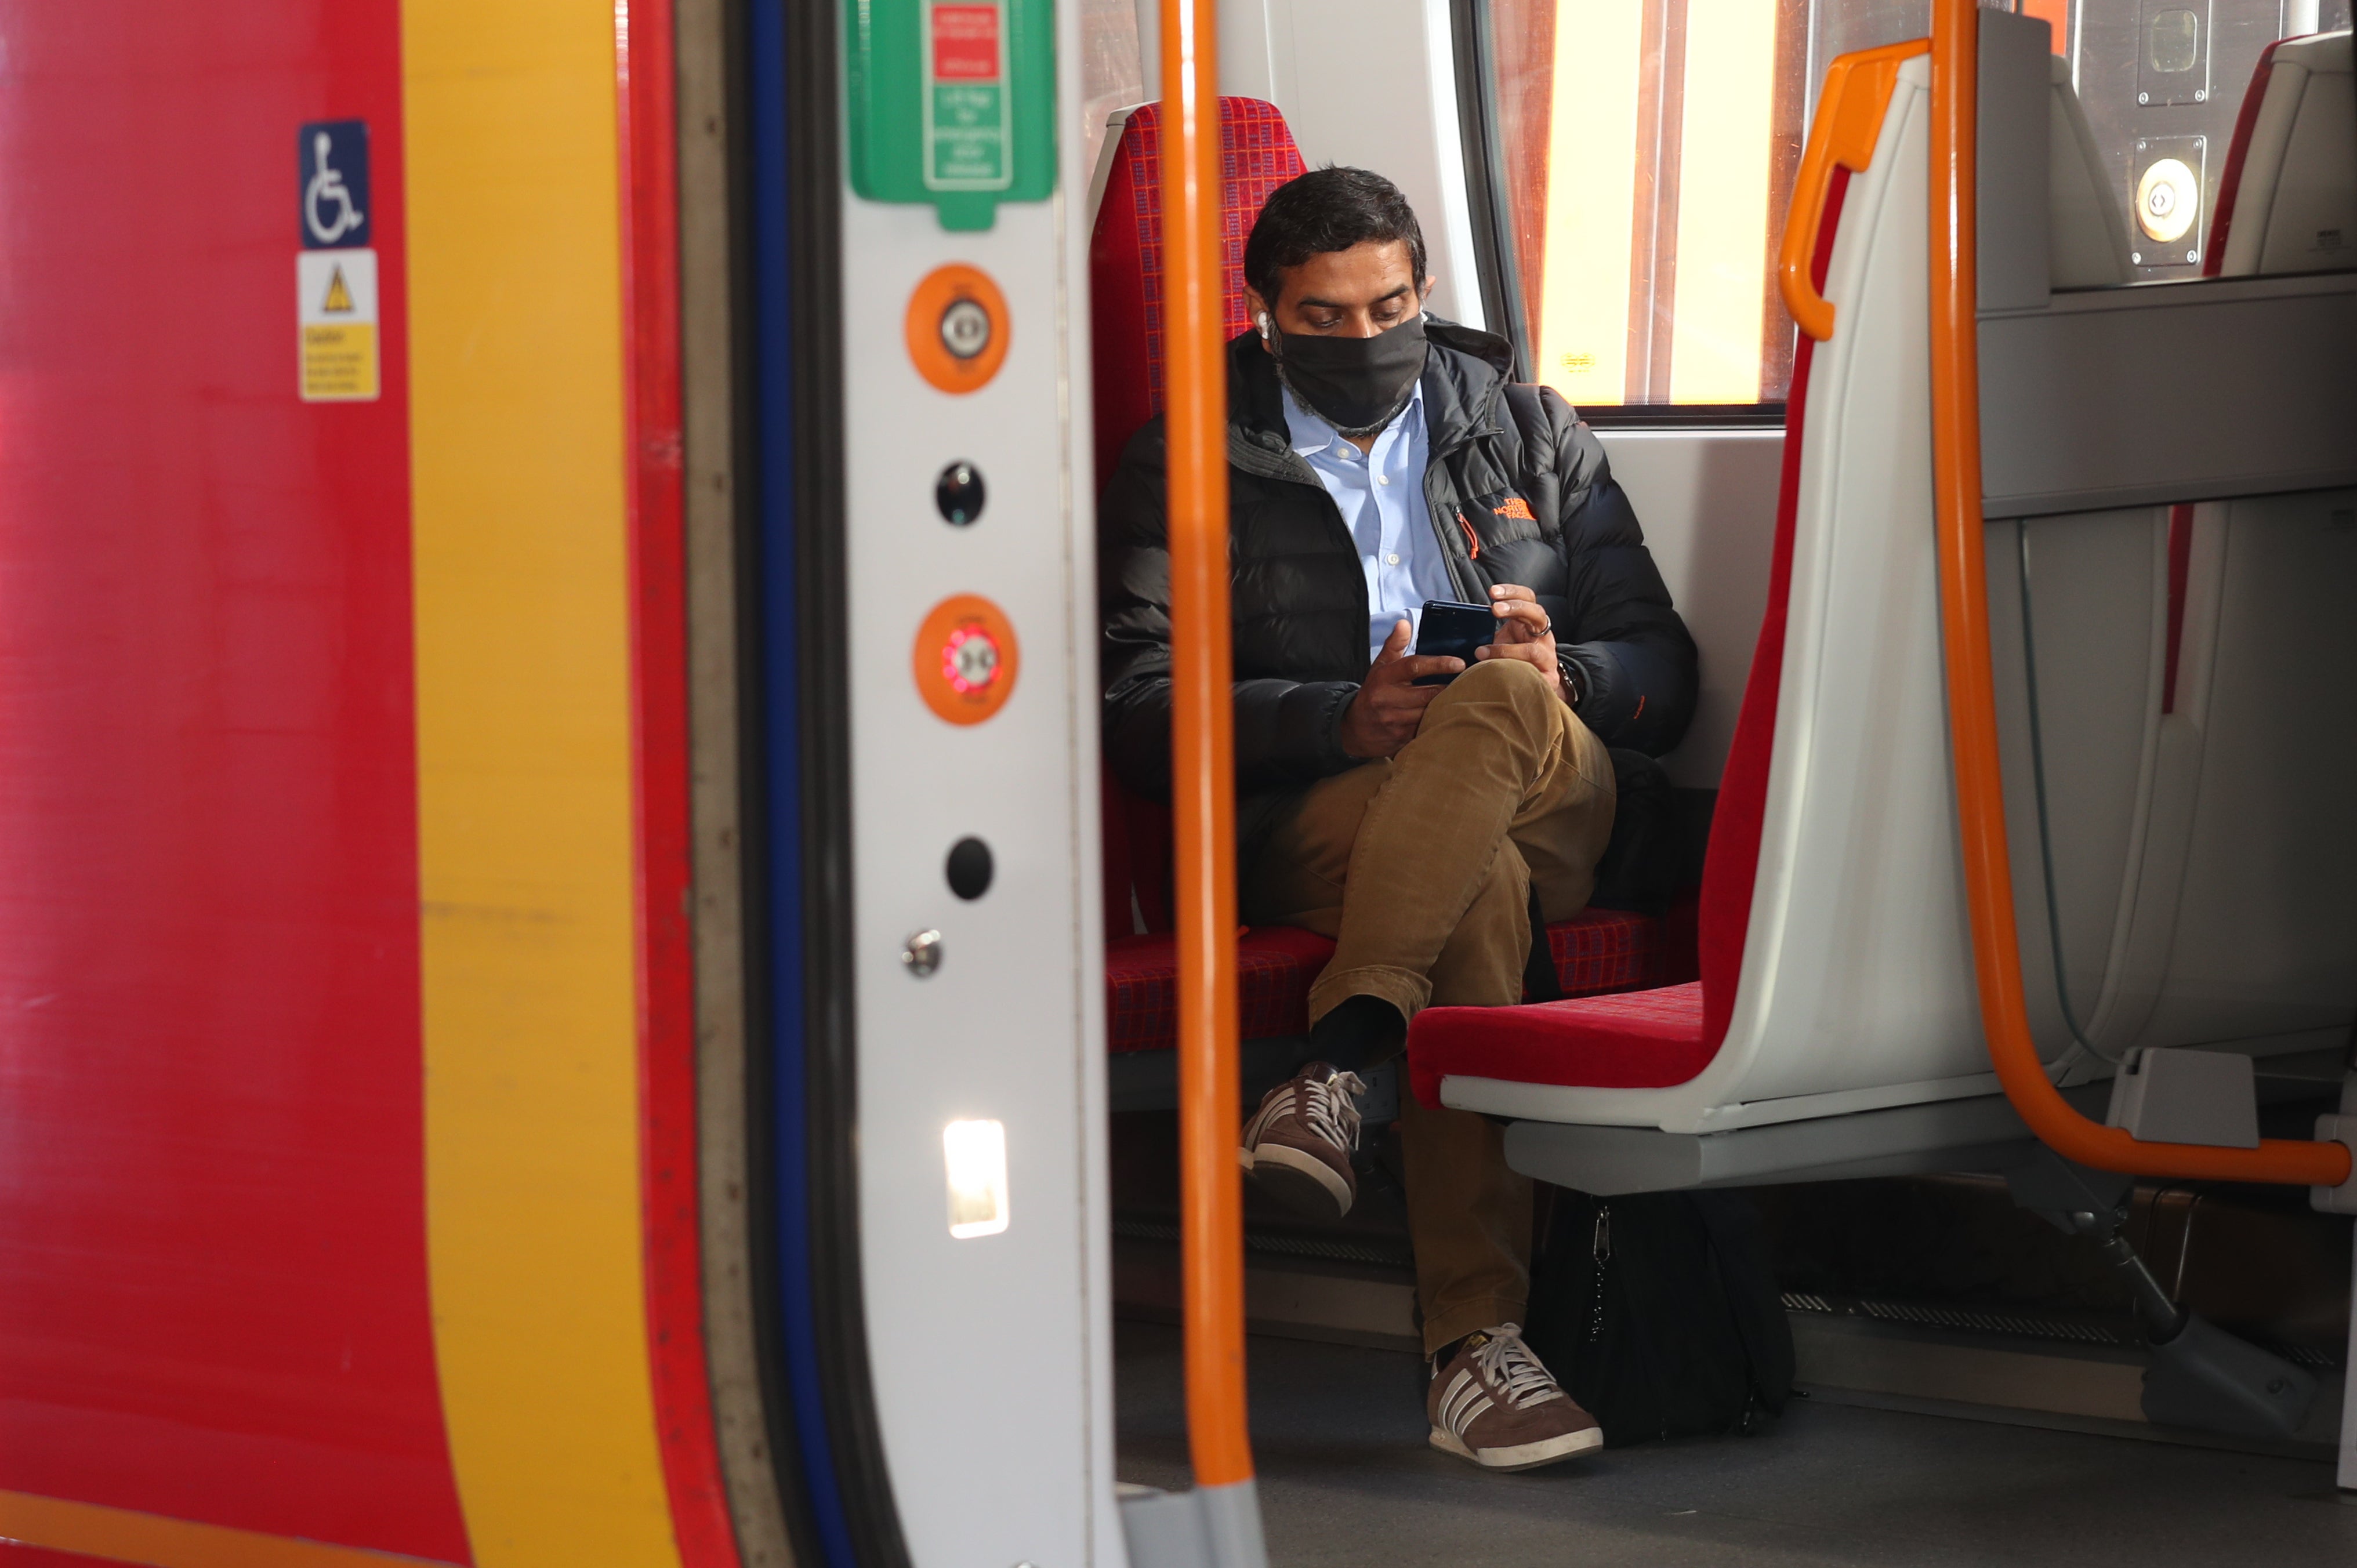 A passenger sits on a train